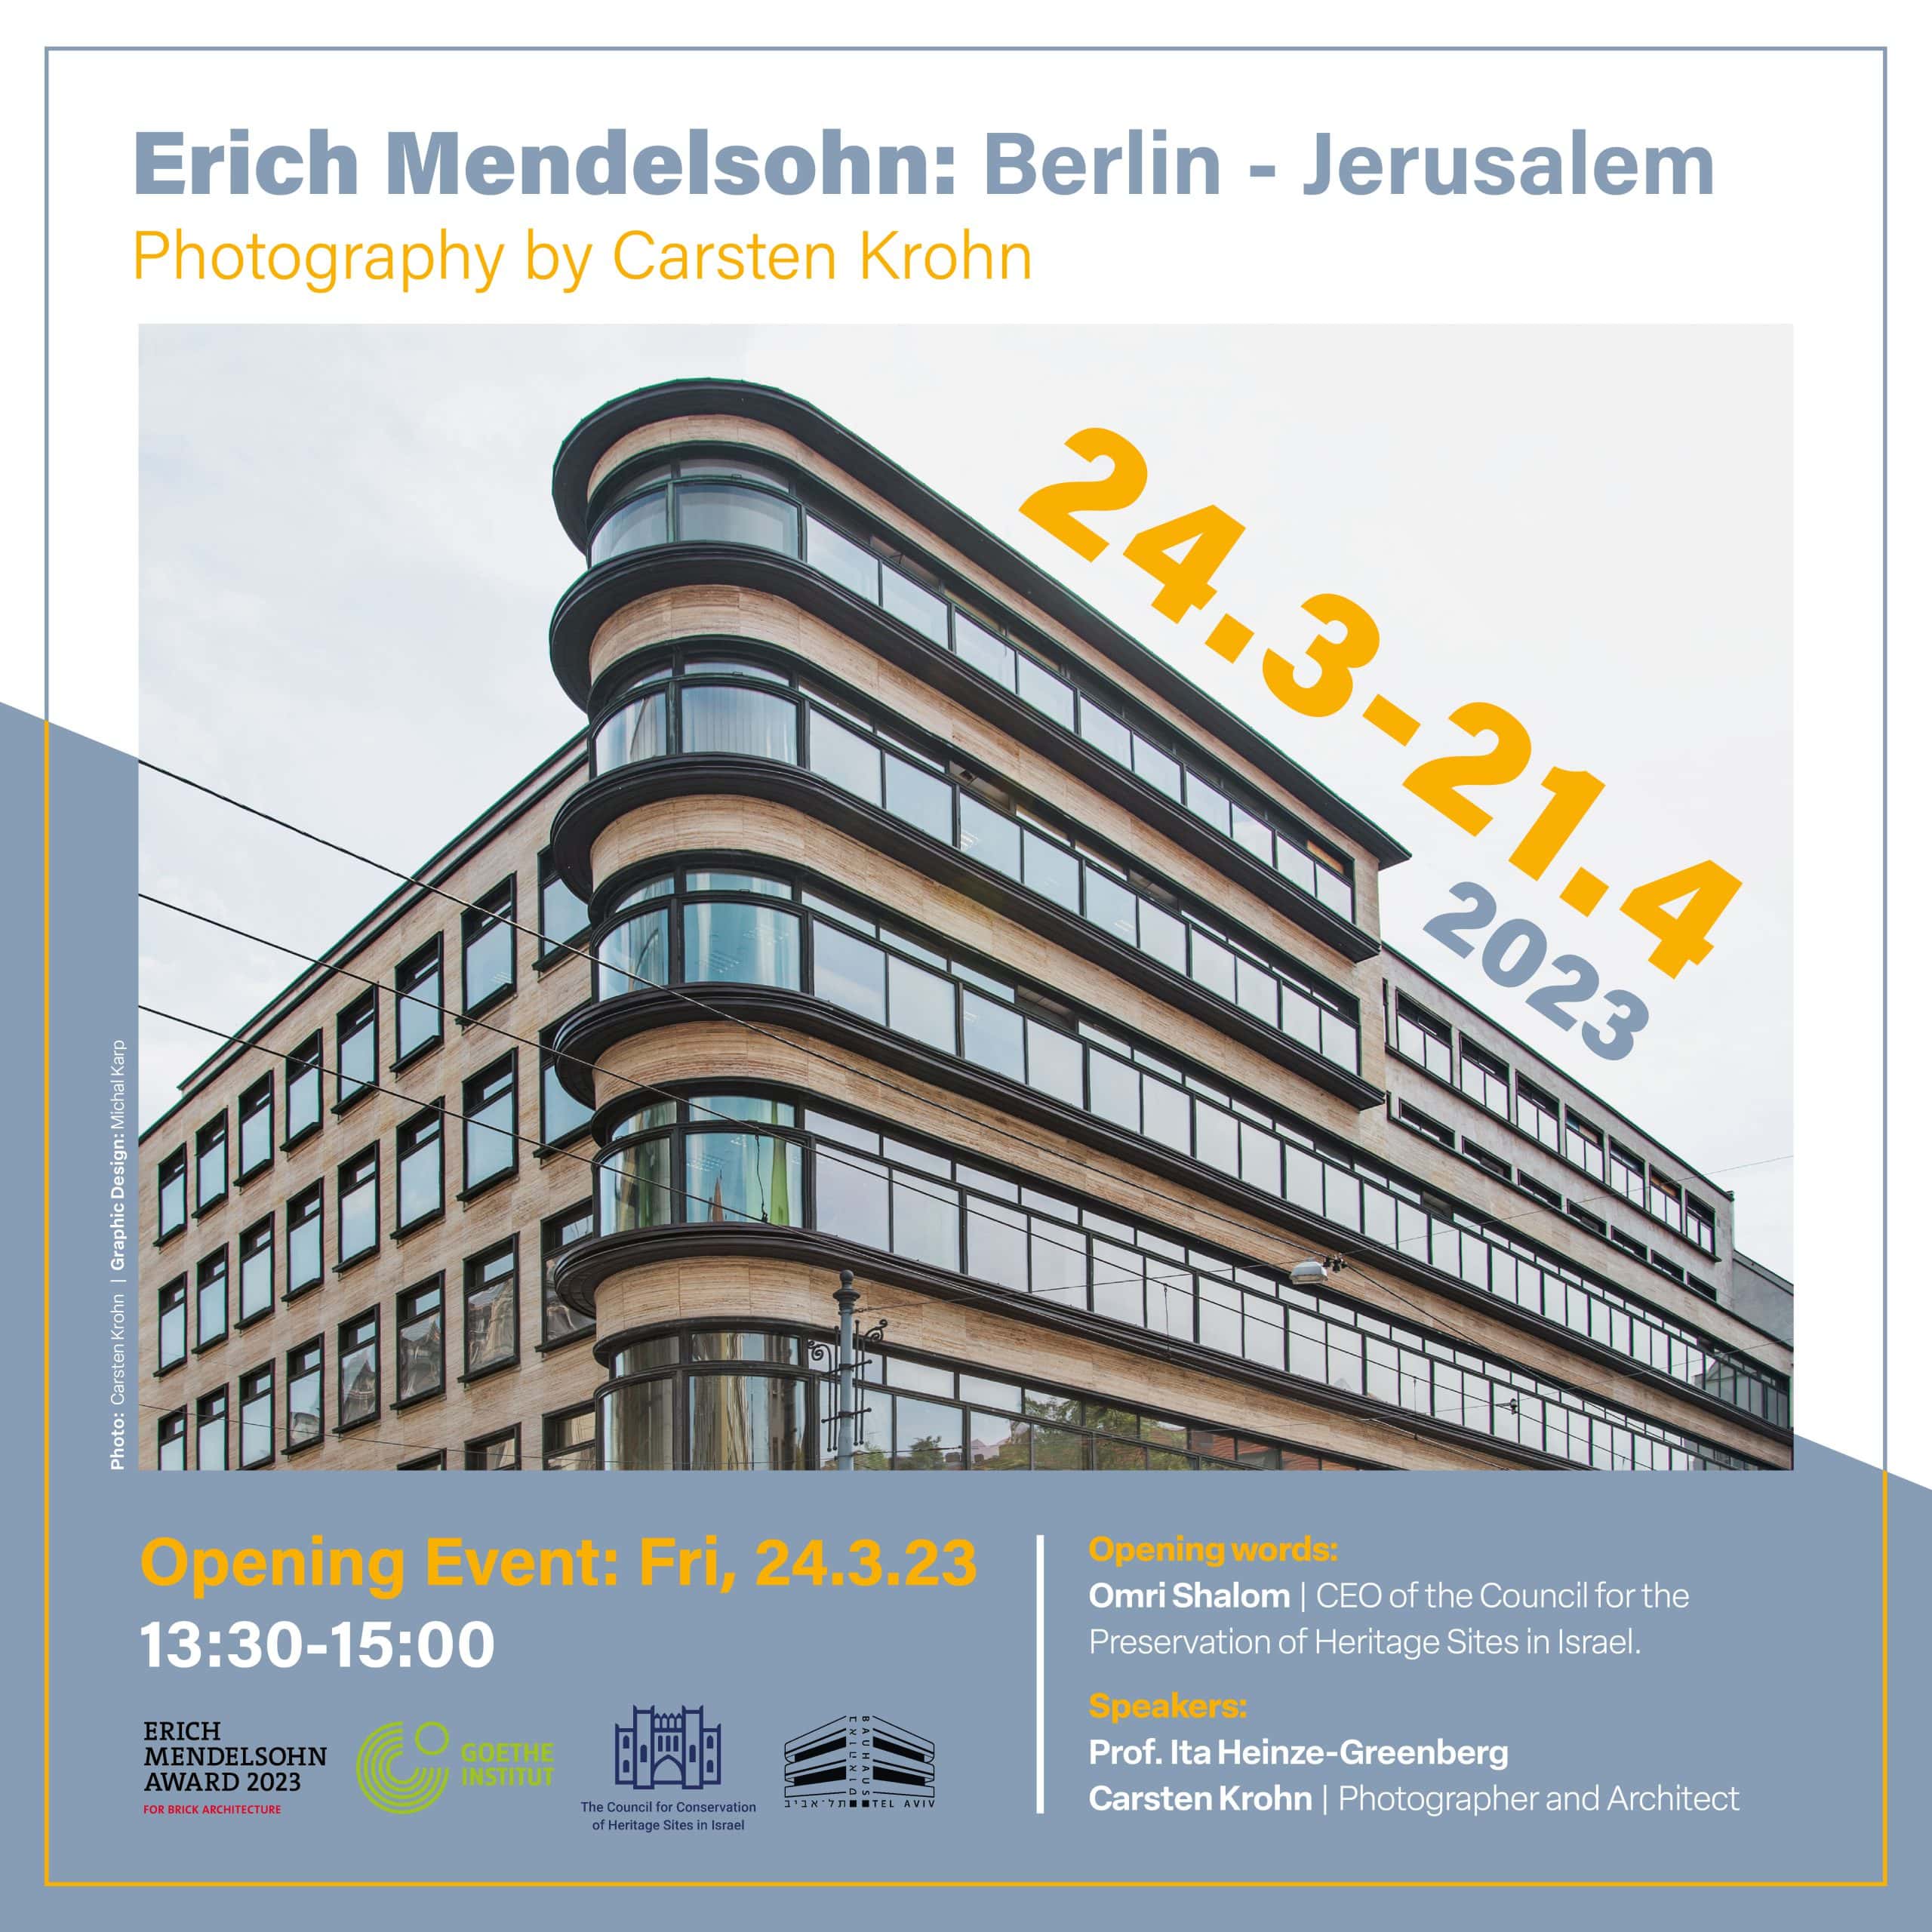 Showing now | “Erich Mendelsohn: Berlin – Jerusalem” Photography by Carsten Krohn